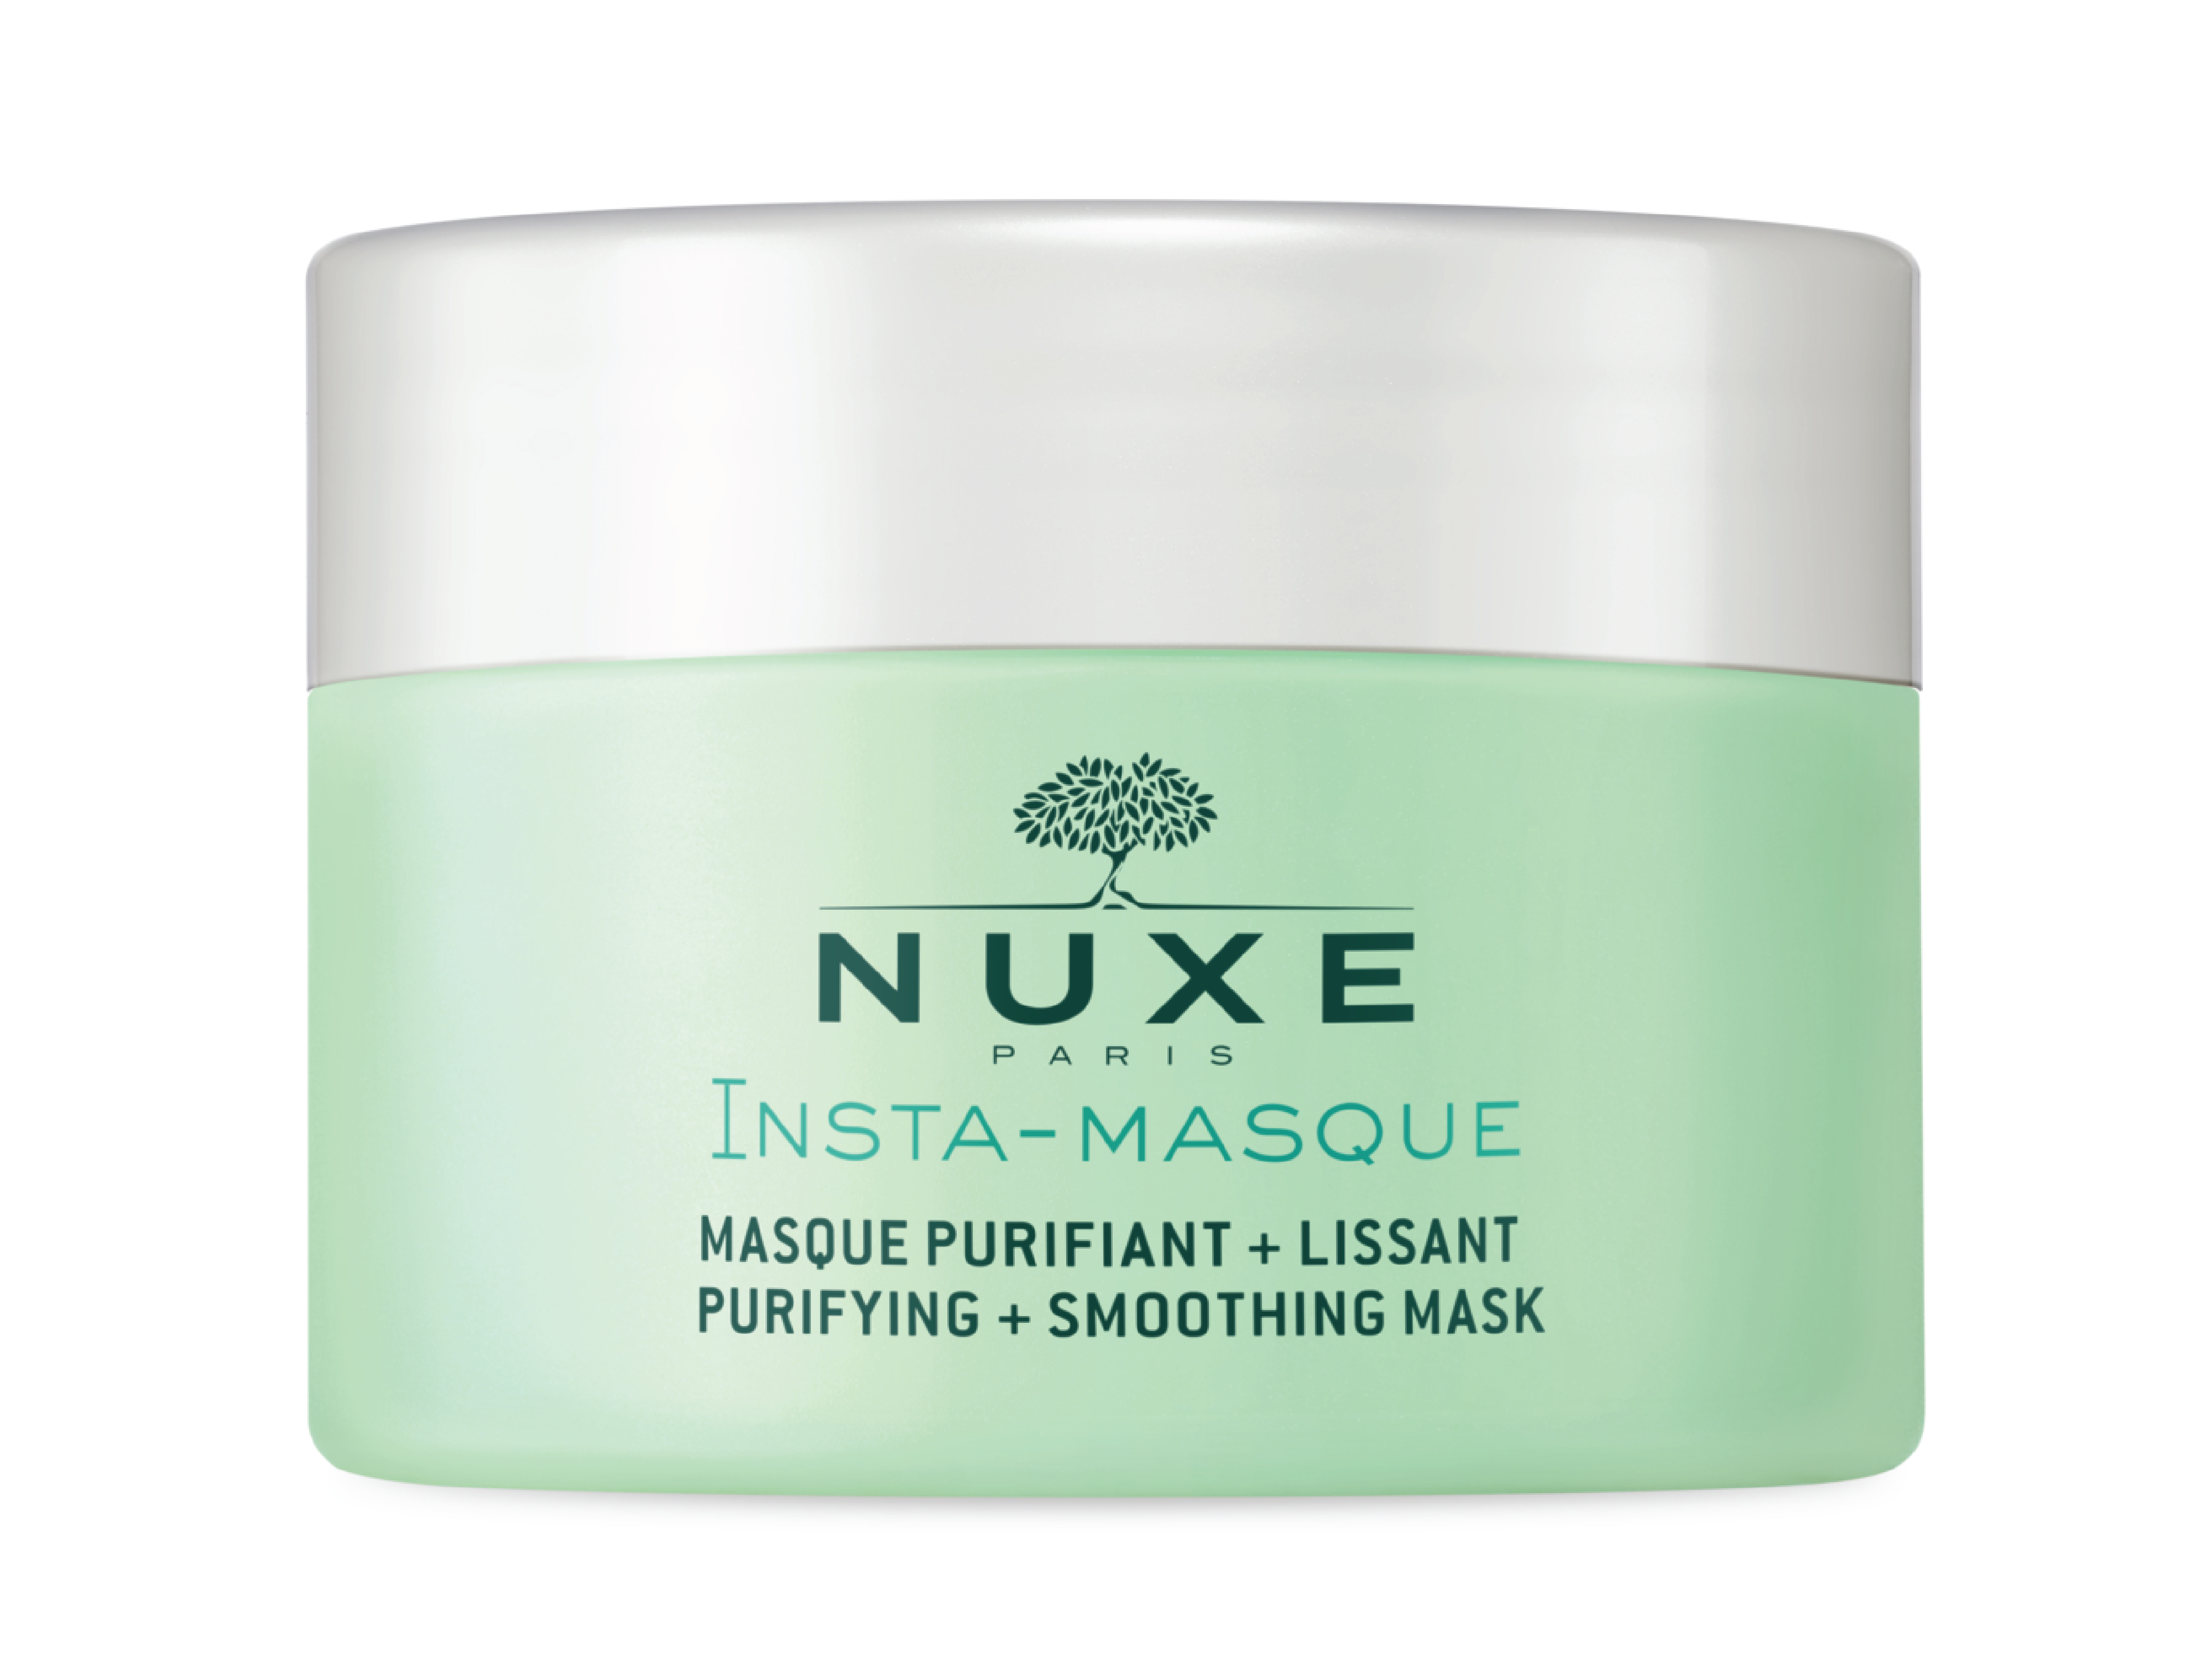 NUXE Insta-Masque Purifying Mask, 50 ml